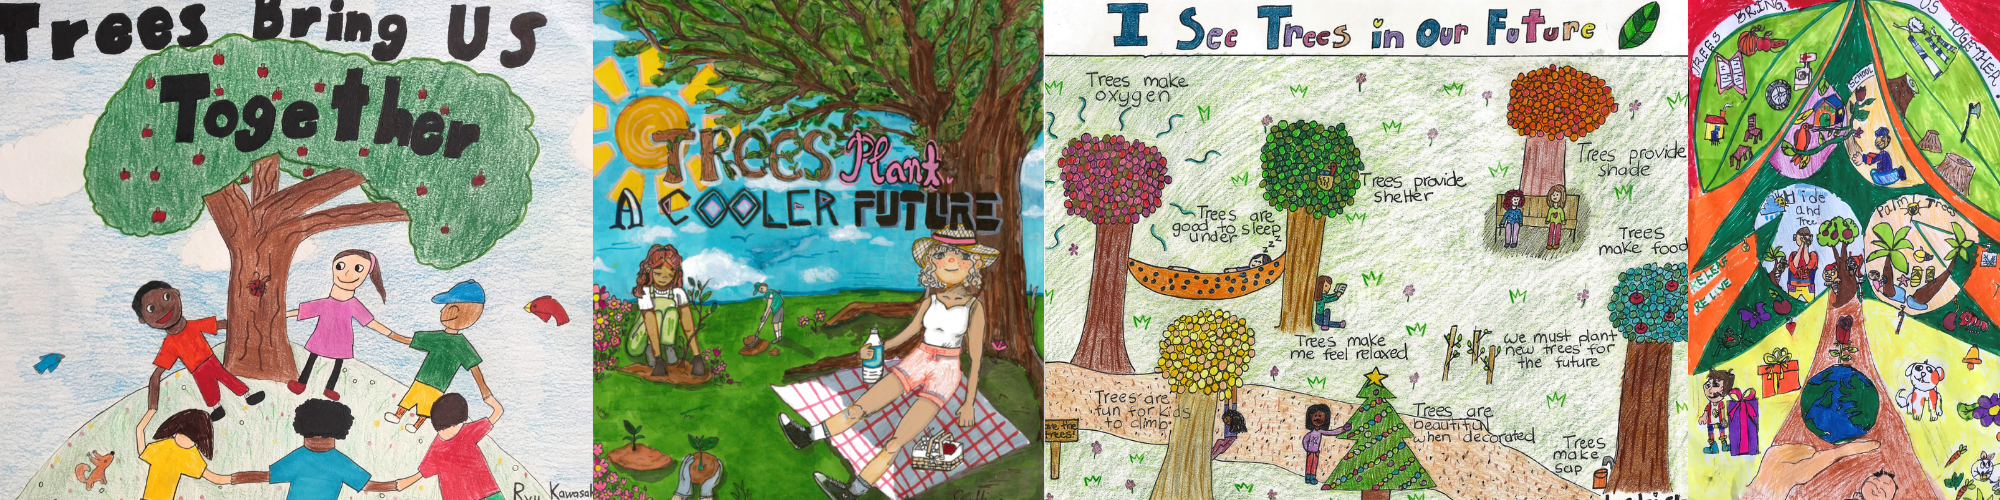 Children's artwork featuring trees